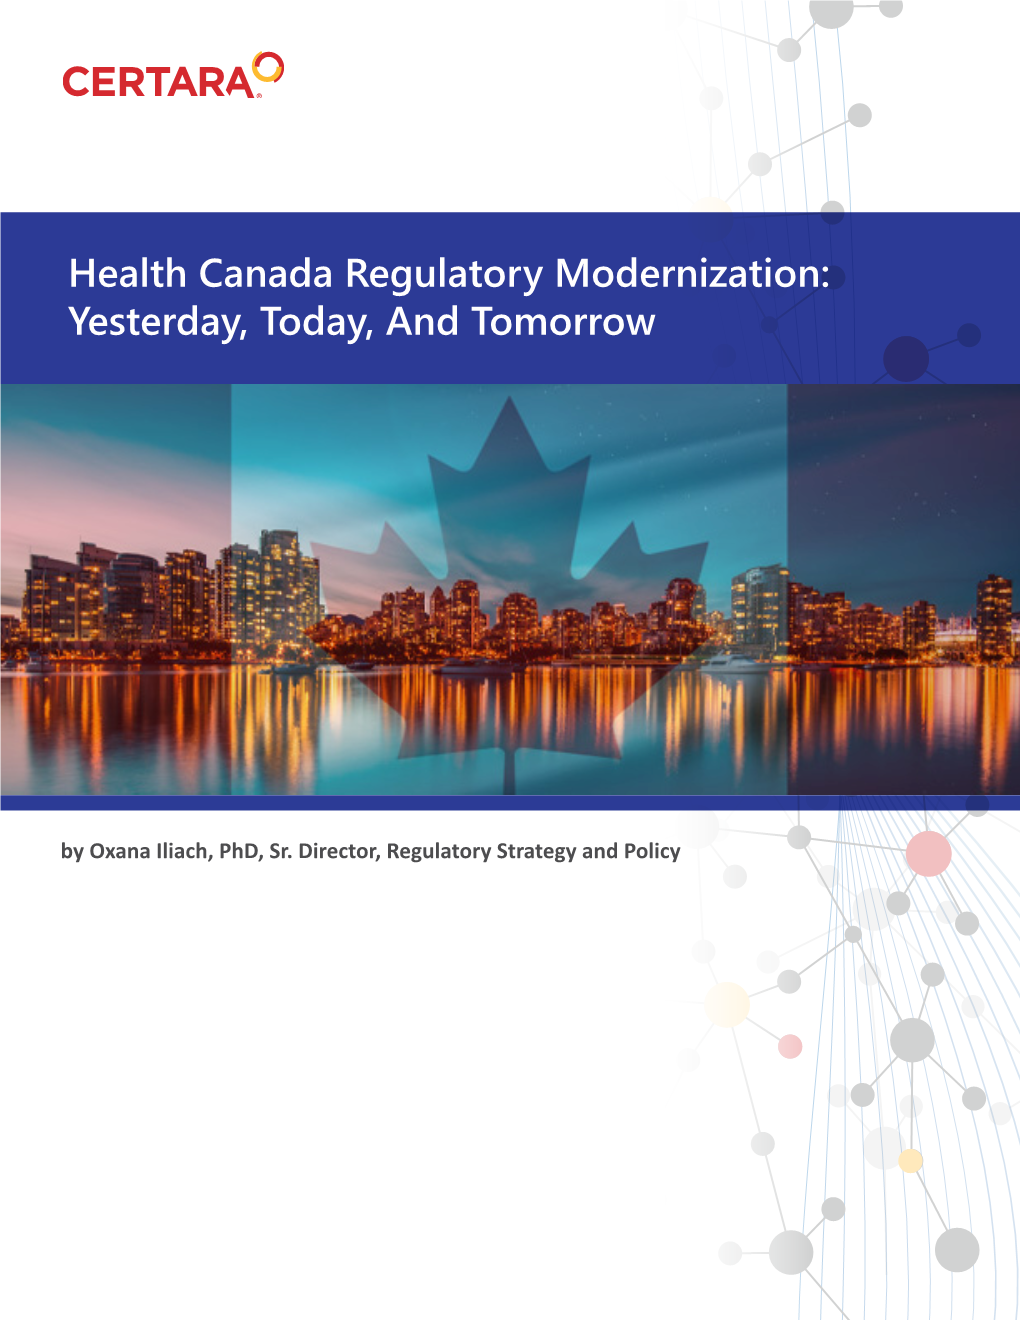 Health Canada Regulatory Modernization: Yesterday, Today, and Tomorrow